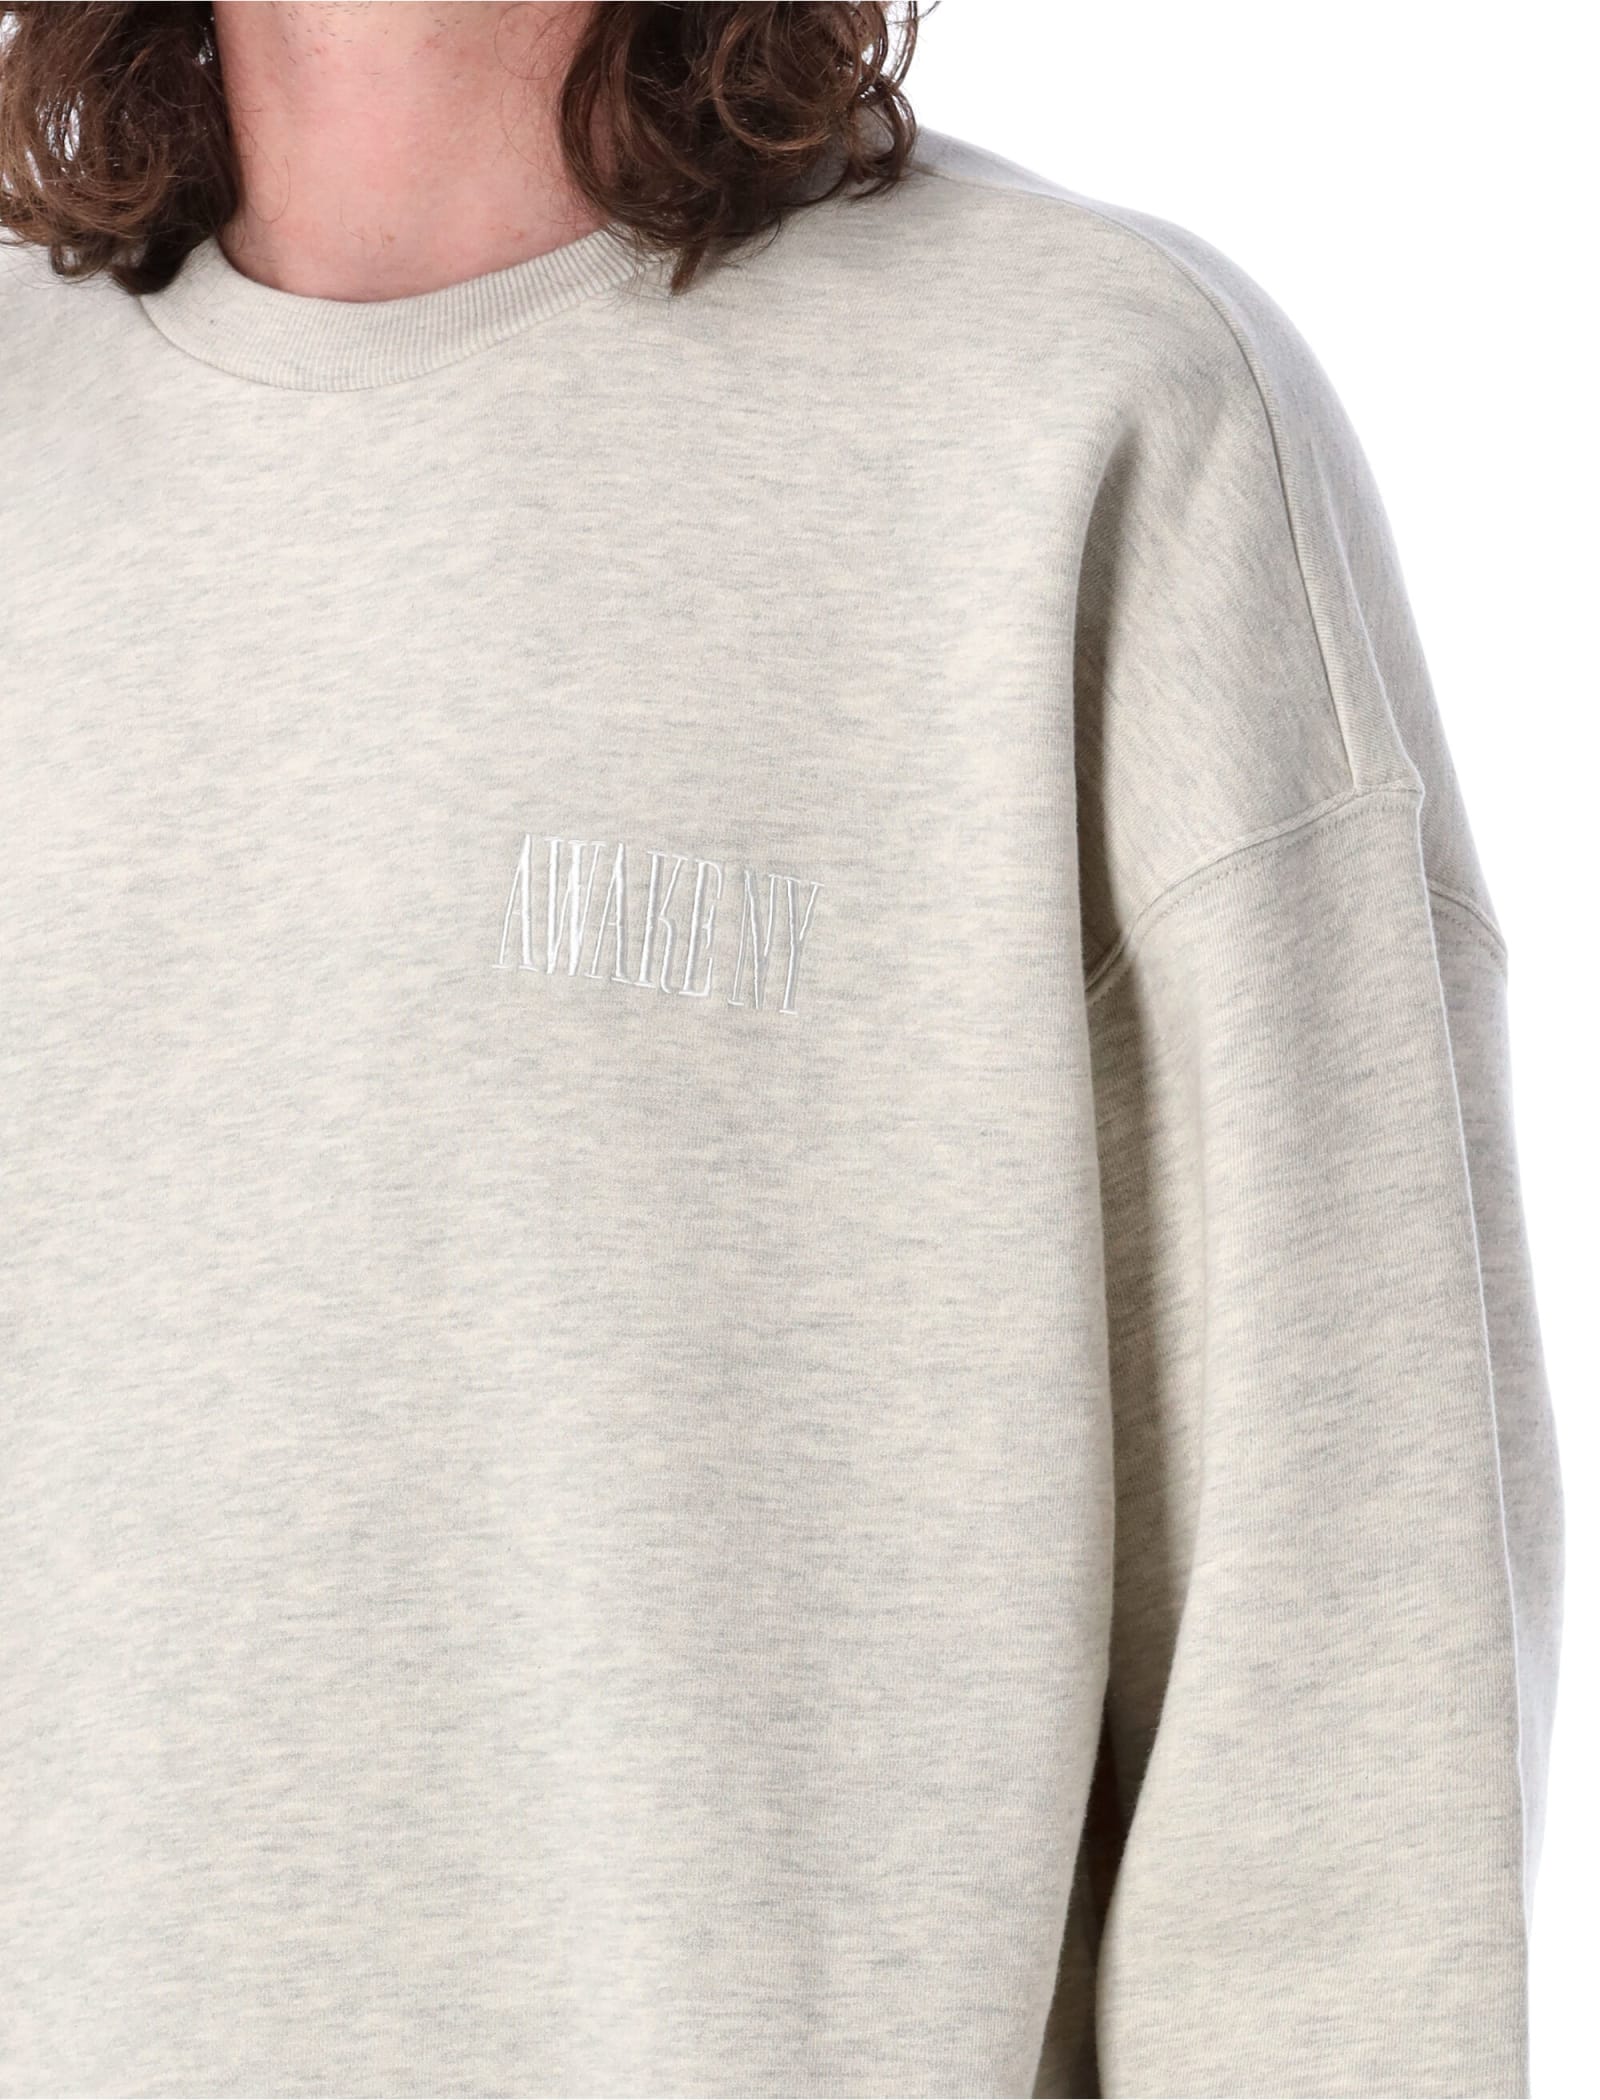 Shop Awake Ny Crewneck Sweatshirt In Grey